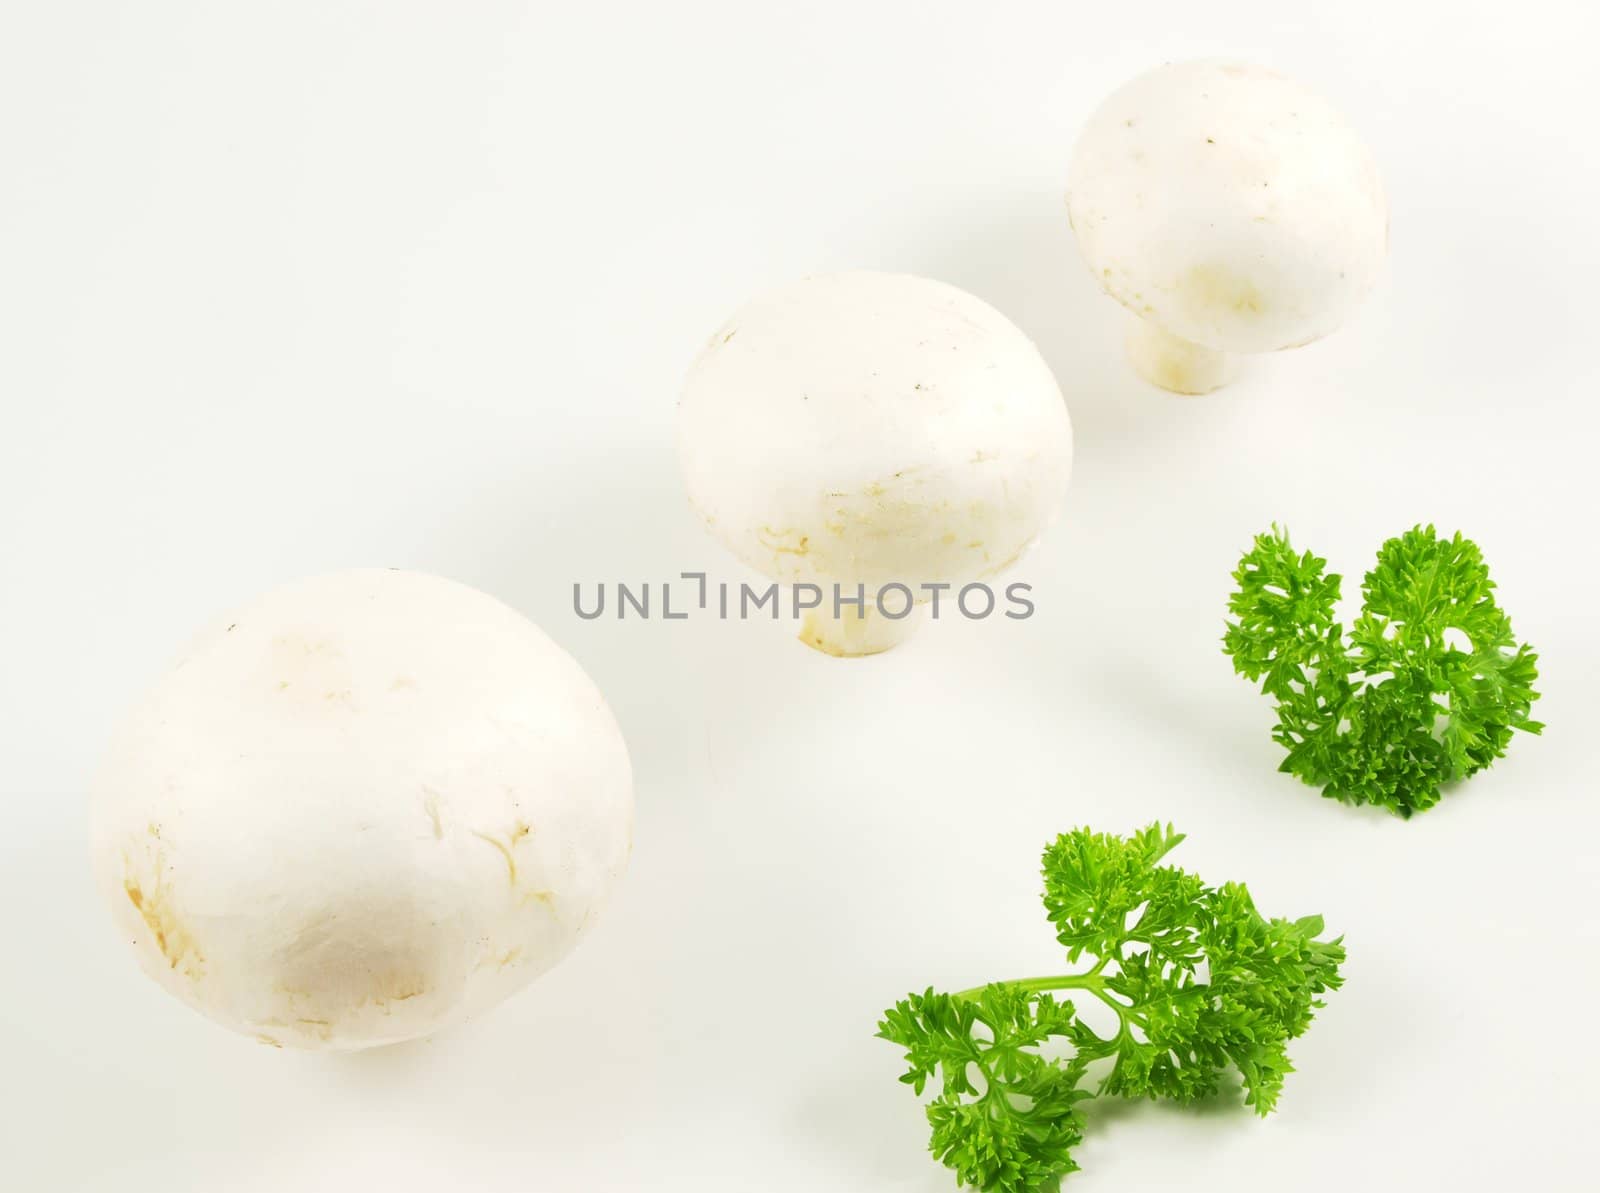 Champignon mushroom with parsley, isolated towards white background